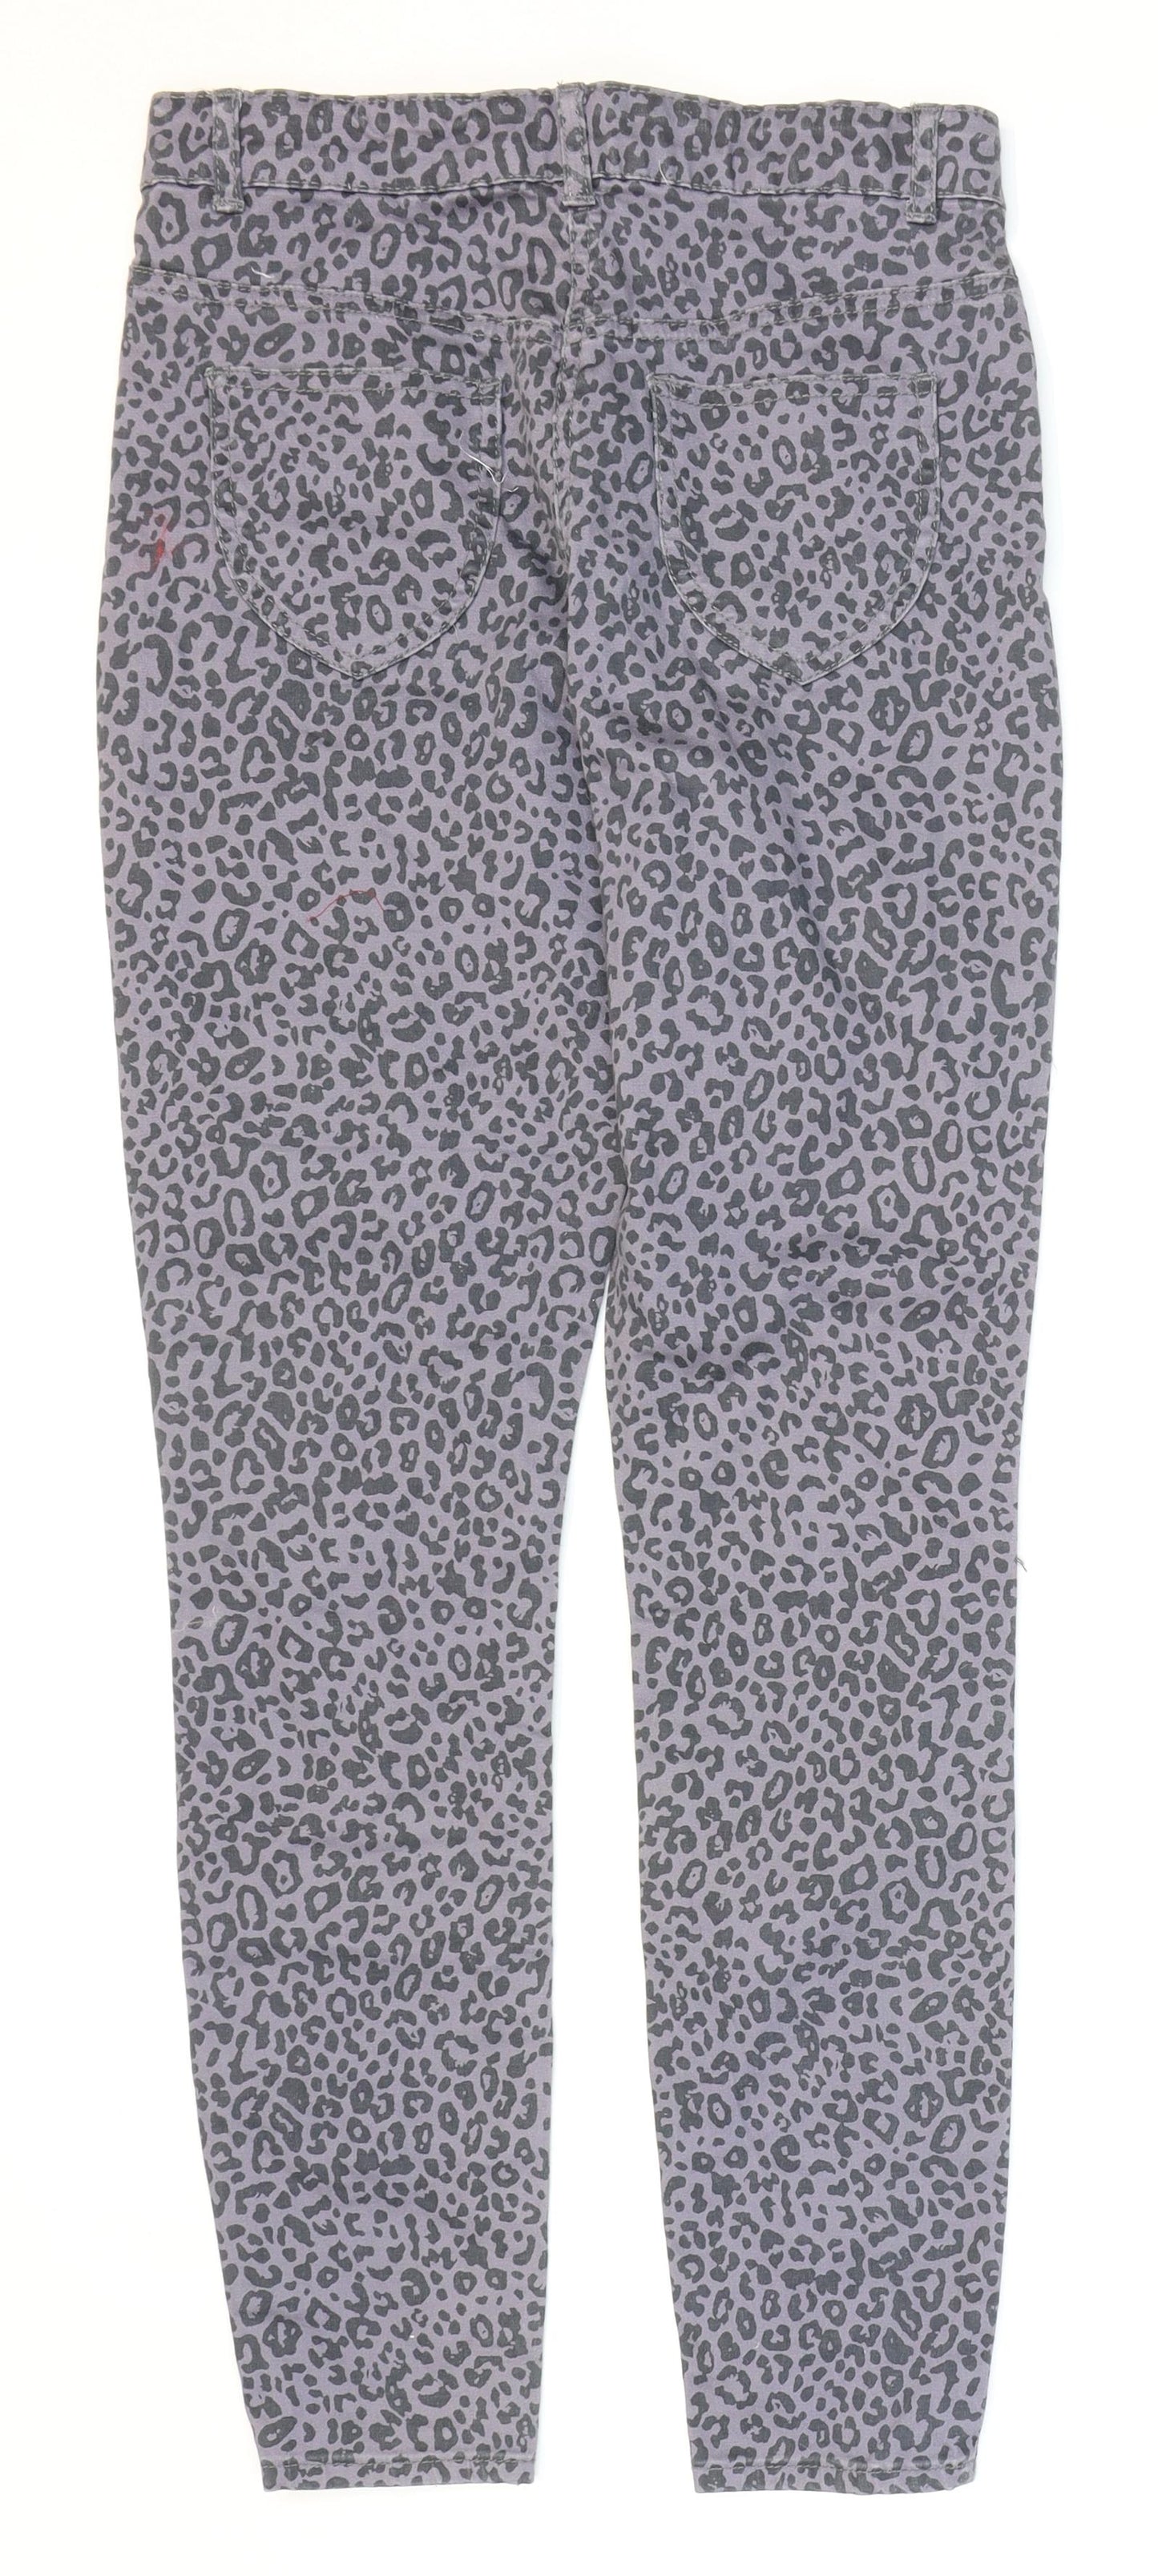 George Girls Purple Animal Print Cotton Skinny Jeans Size 13-14 Years Regular Zip